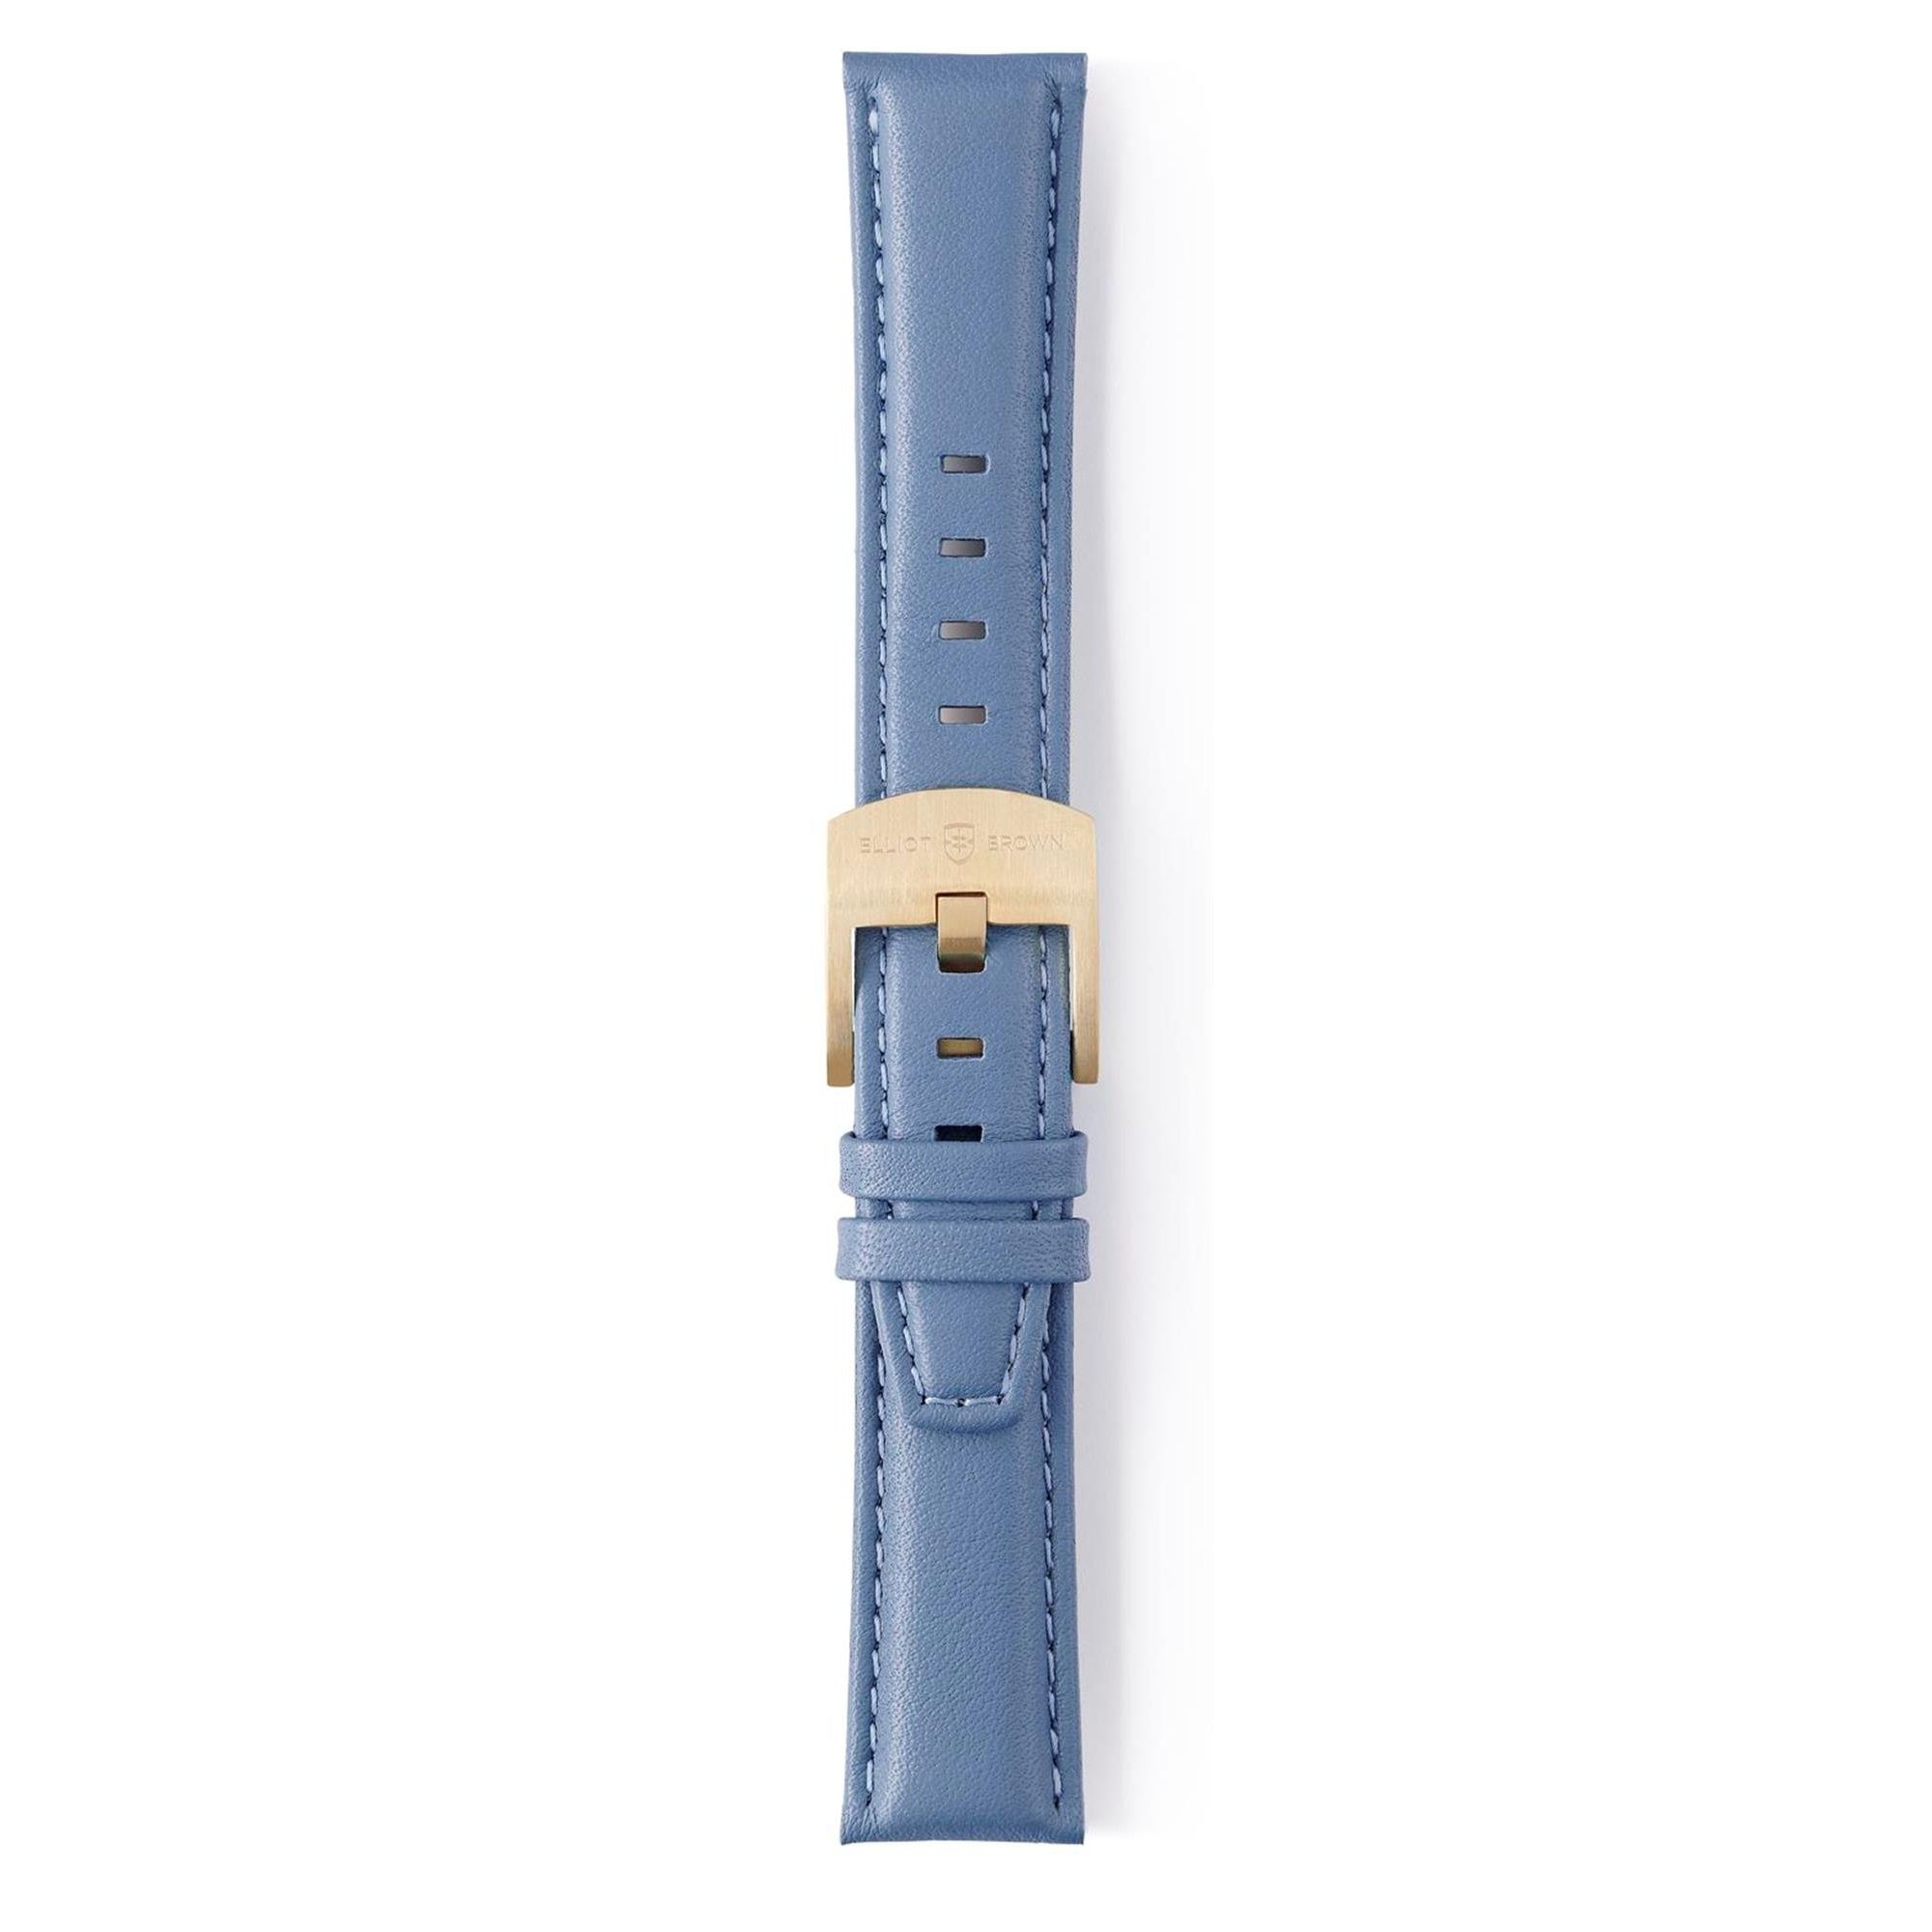 Elliot Brown STL-L57 Kimmeridge Teal Blue Leather Strap product